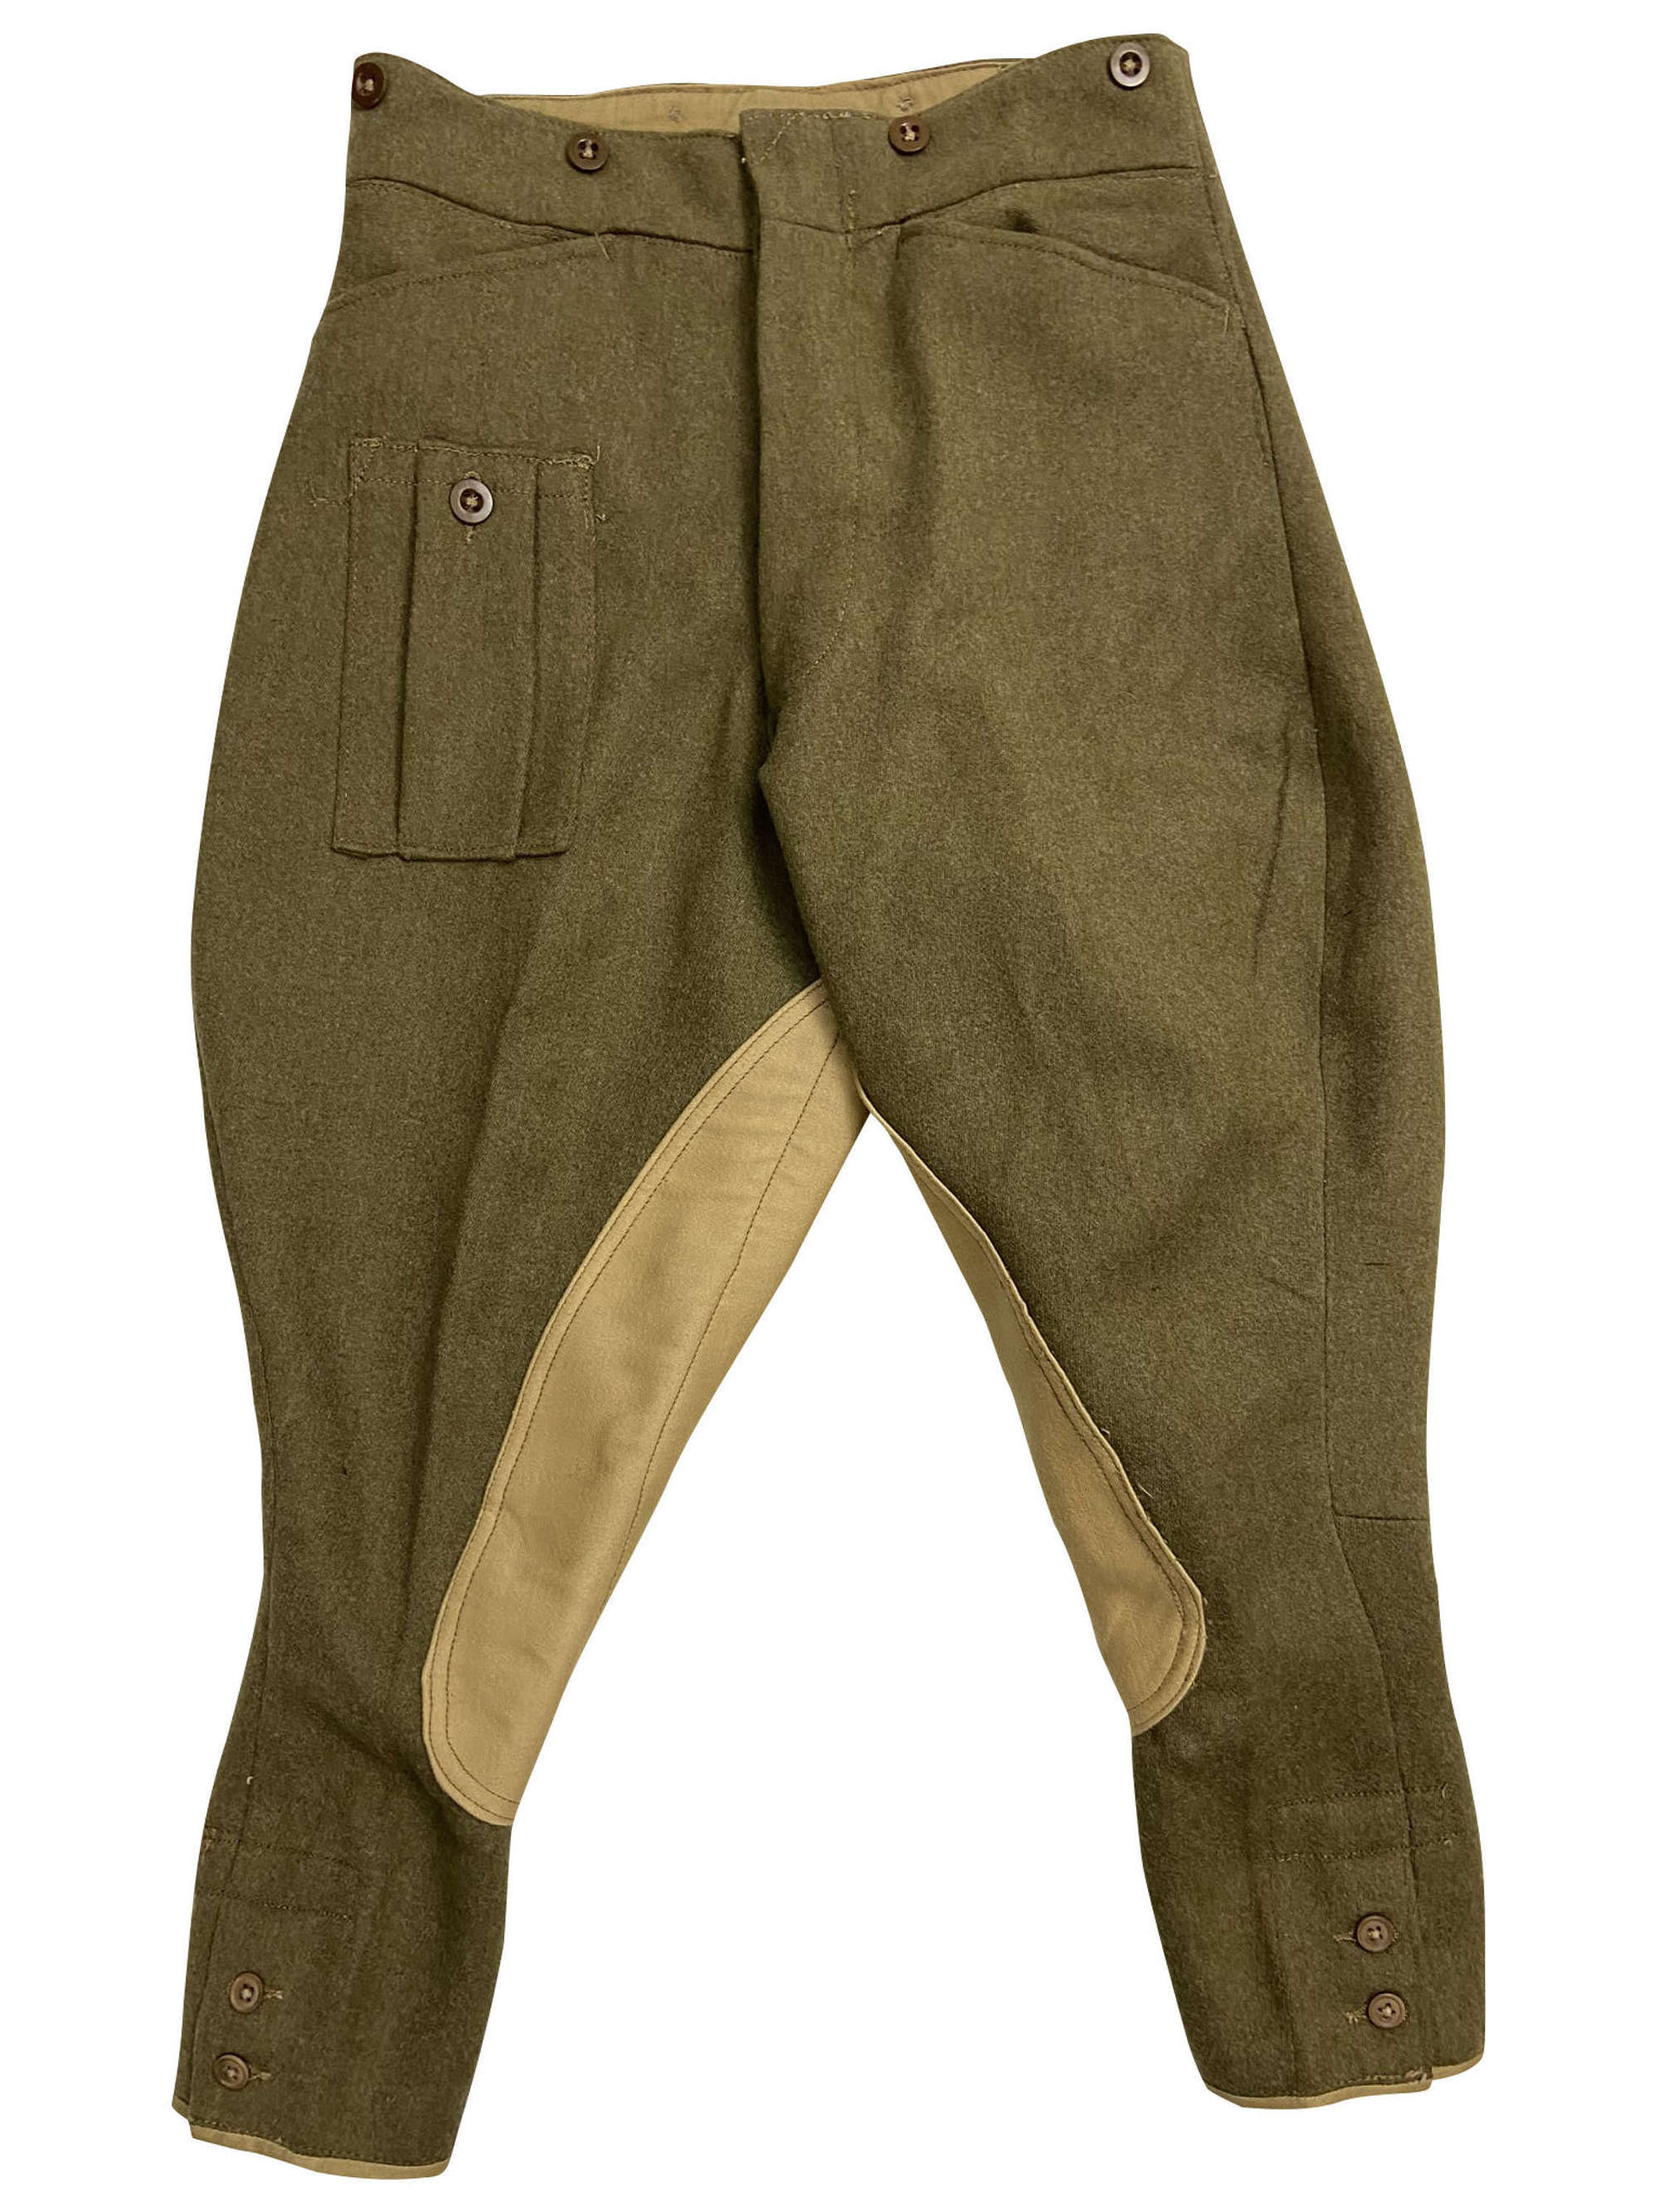 Original 1944 Dated British Army Dispatch Riders Breeches - Size 3